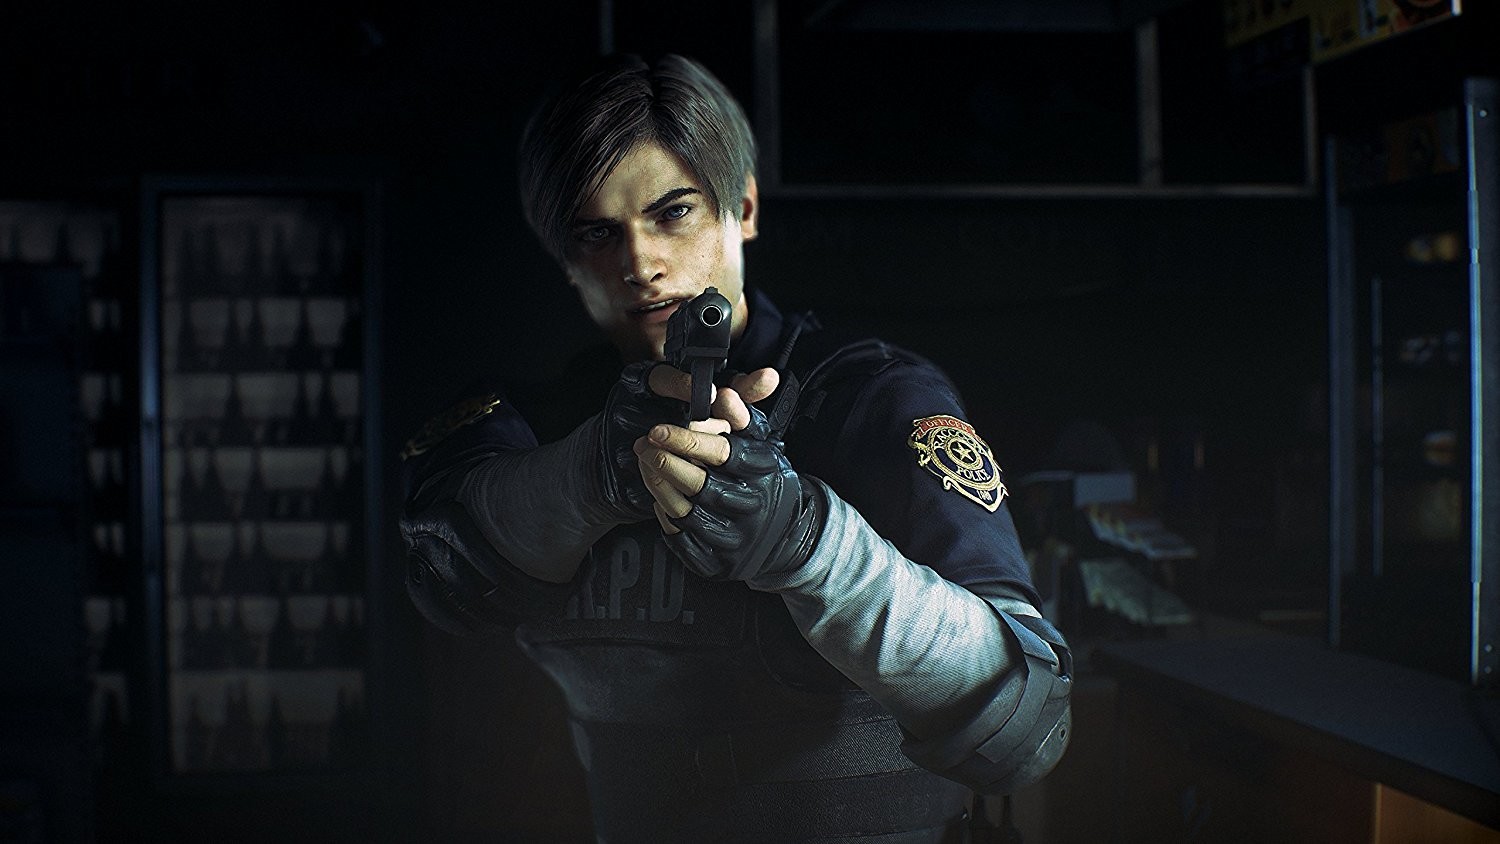 Resident Evil 2 Remake Review